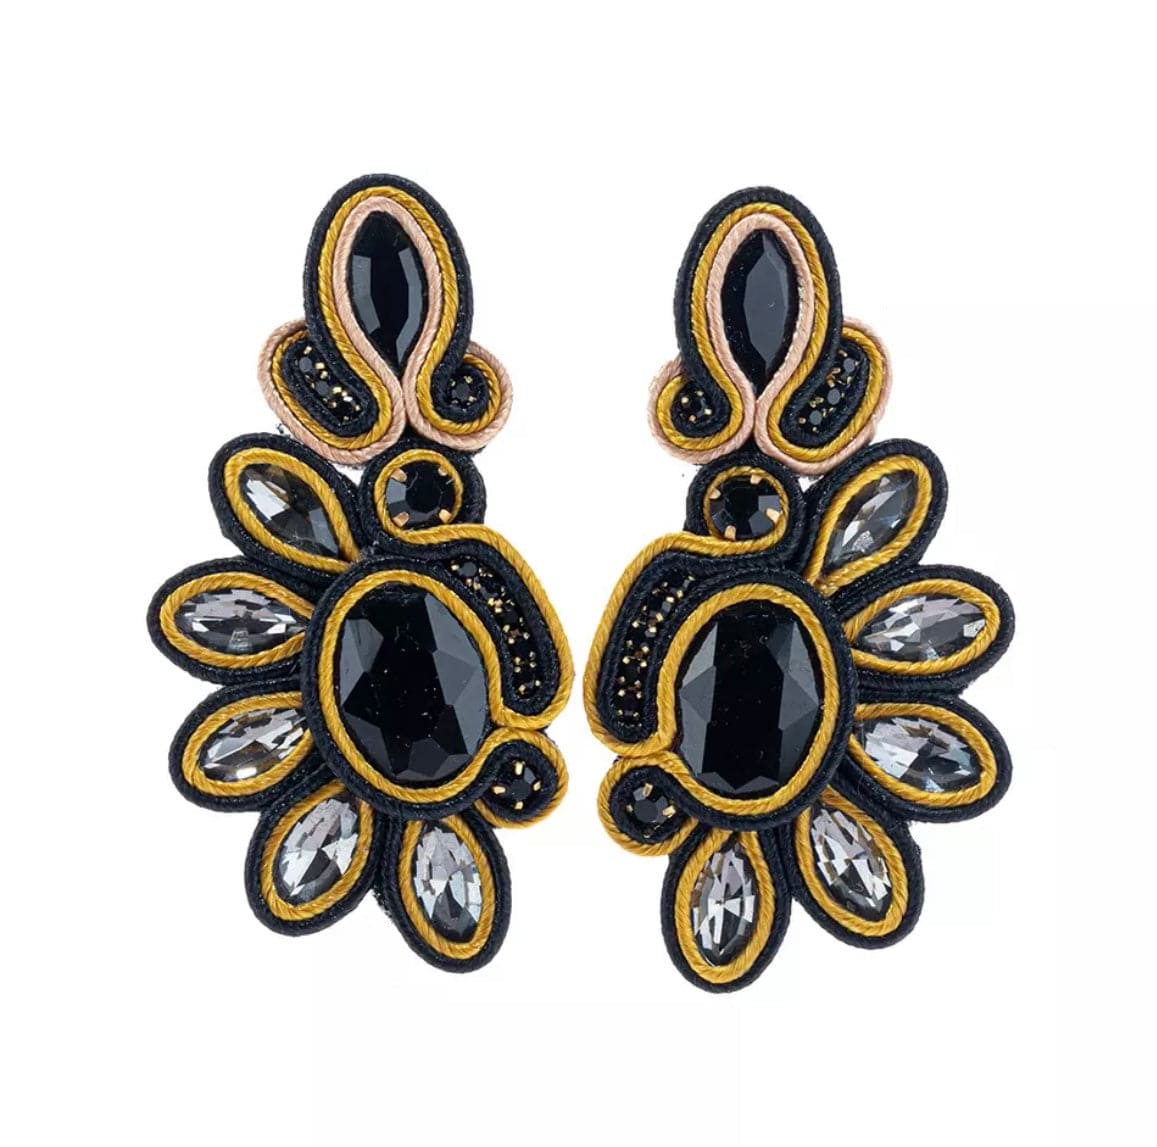 Bohemian Peacock Earrings - Glitterbugs - Splash Swimwear  - earrings, Feb22, glitterbugs - Splash Swimwear 